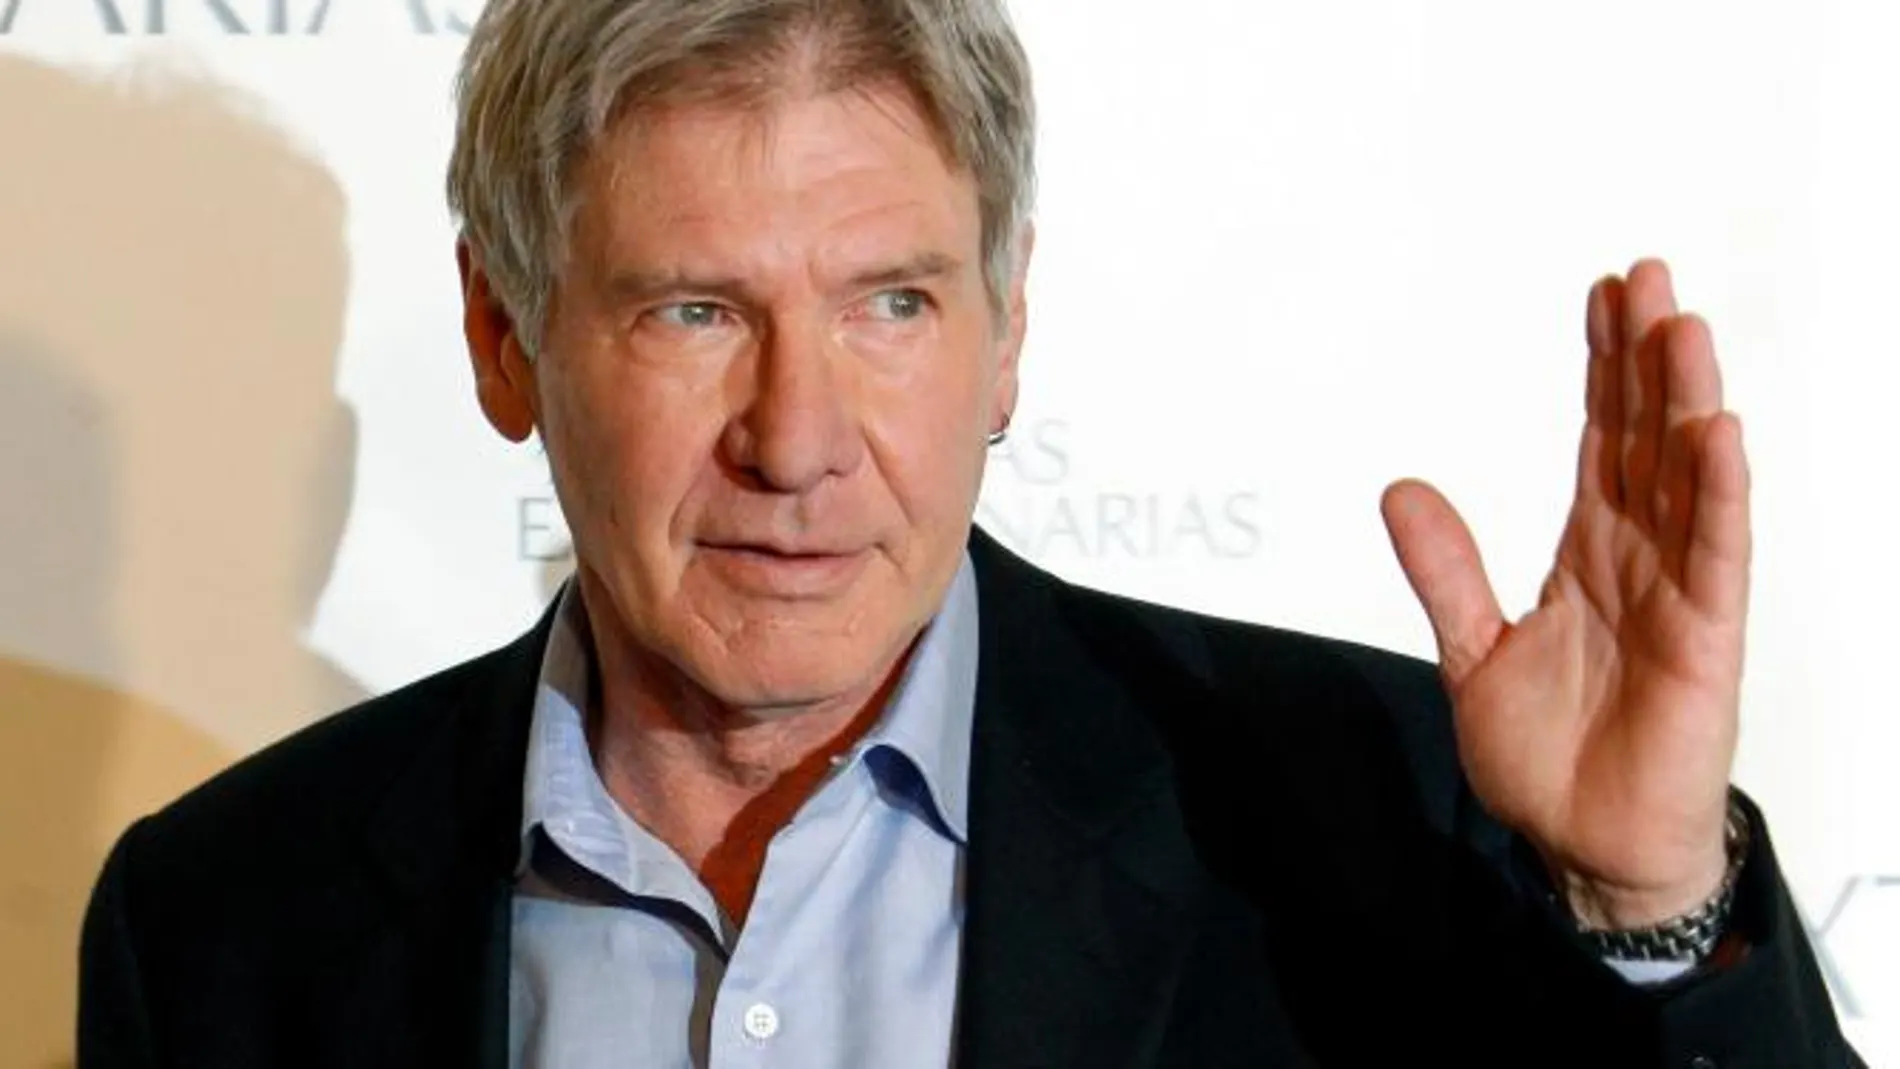 Harrison Ford luce un envidiable aspecto a sus 78 años